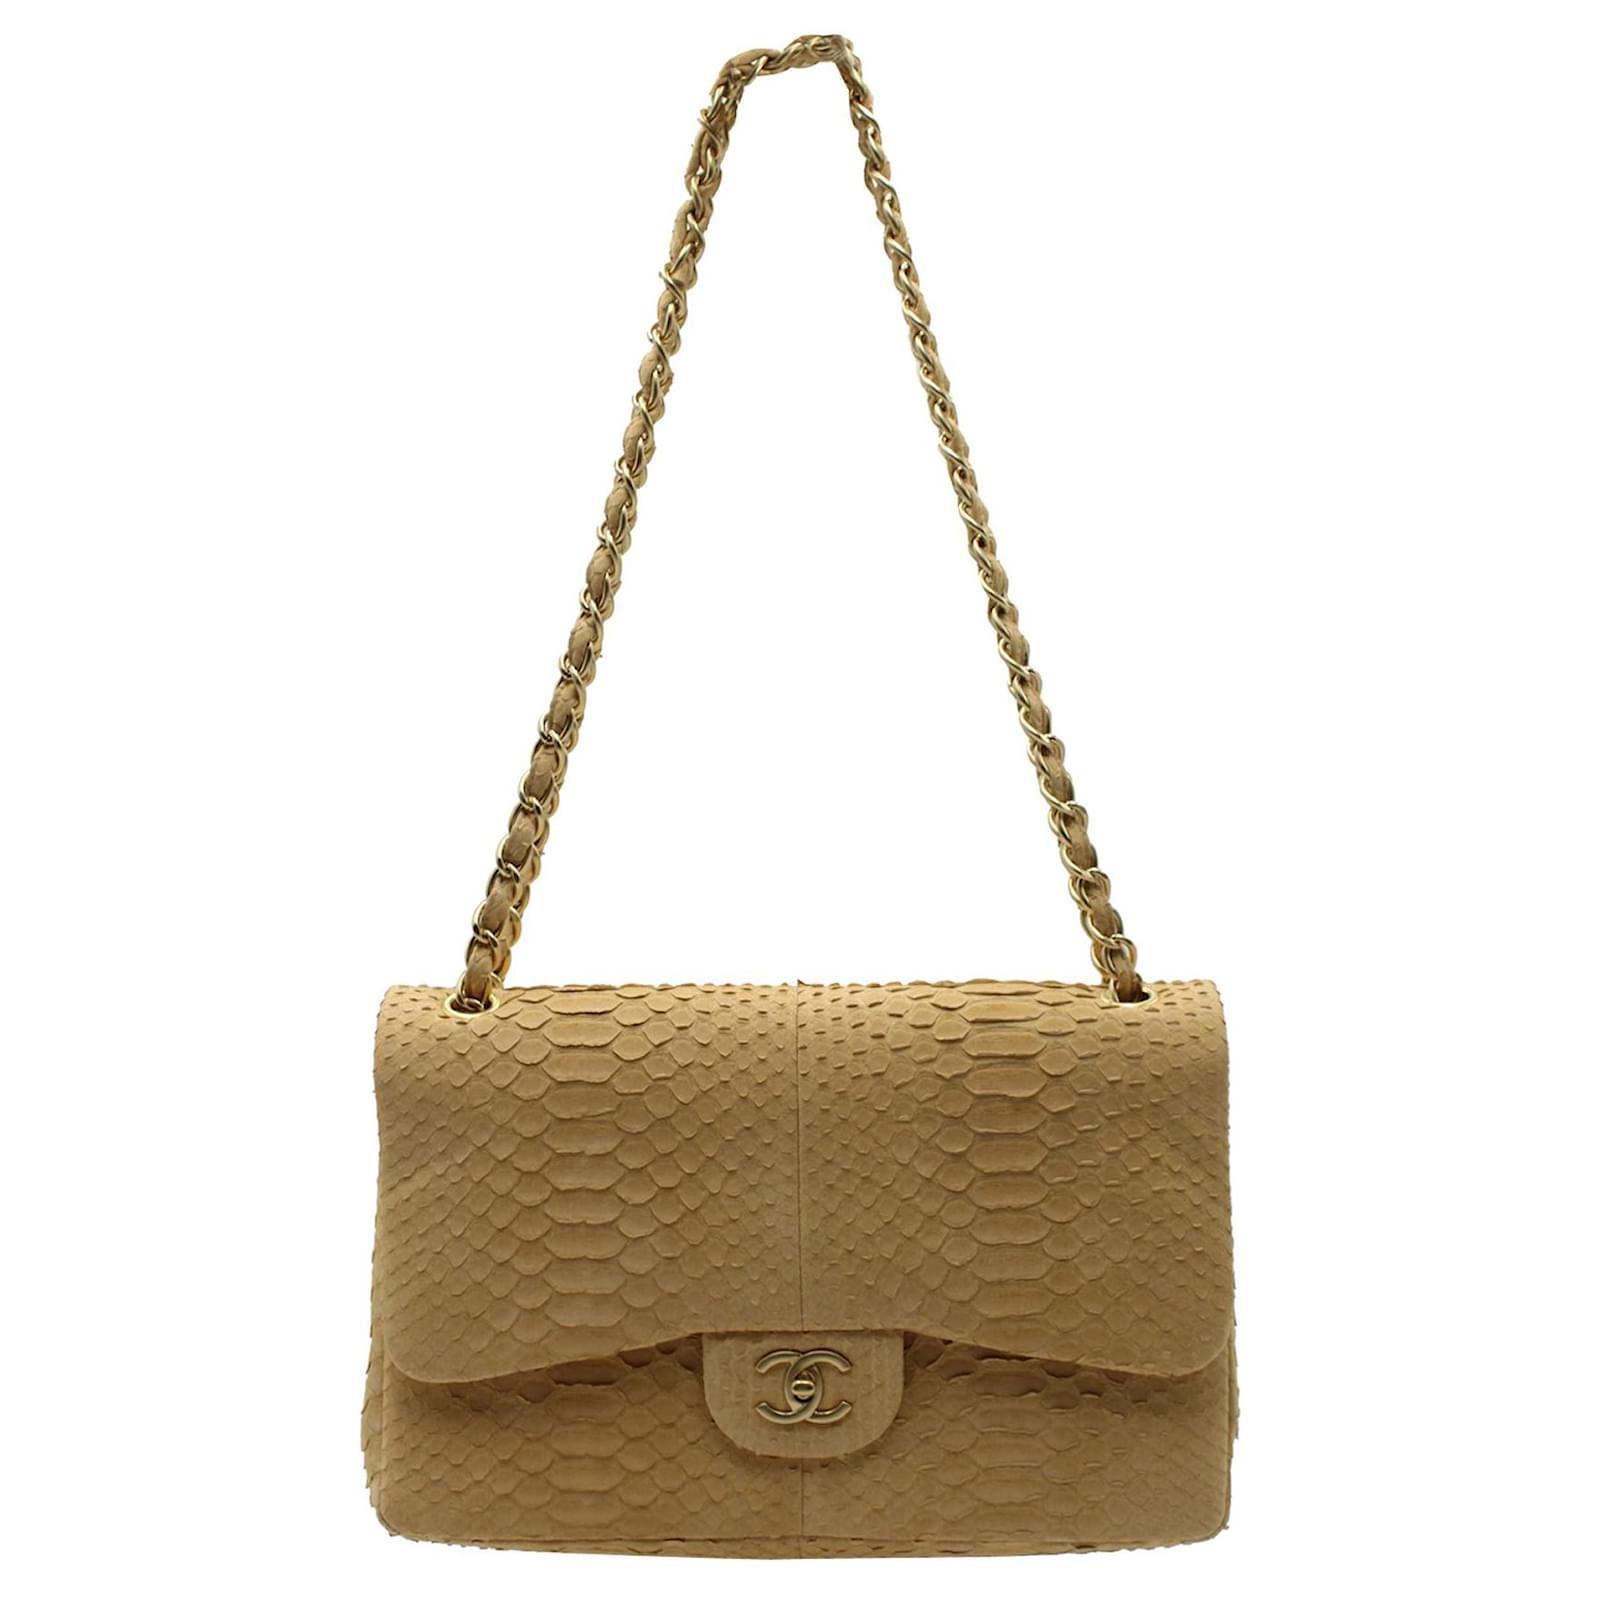 Chanel Beige Double Flap Matte Python Skin Jumbo Bag with Golden